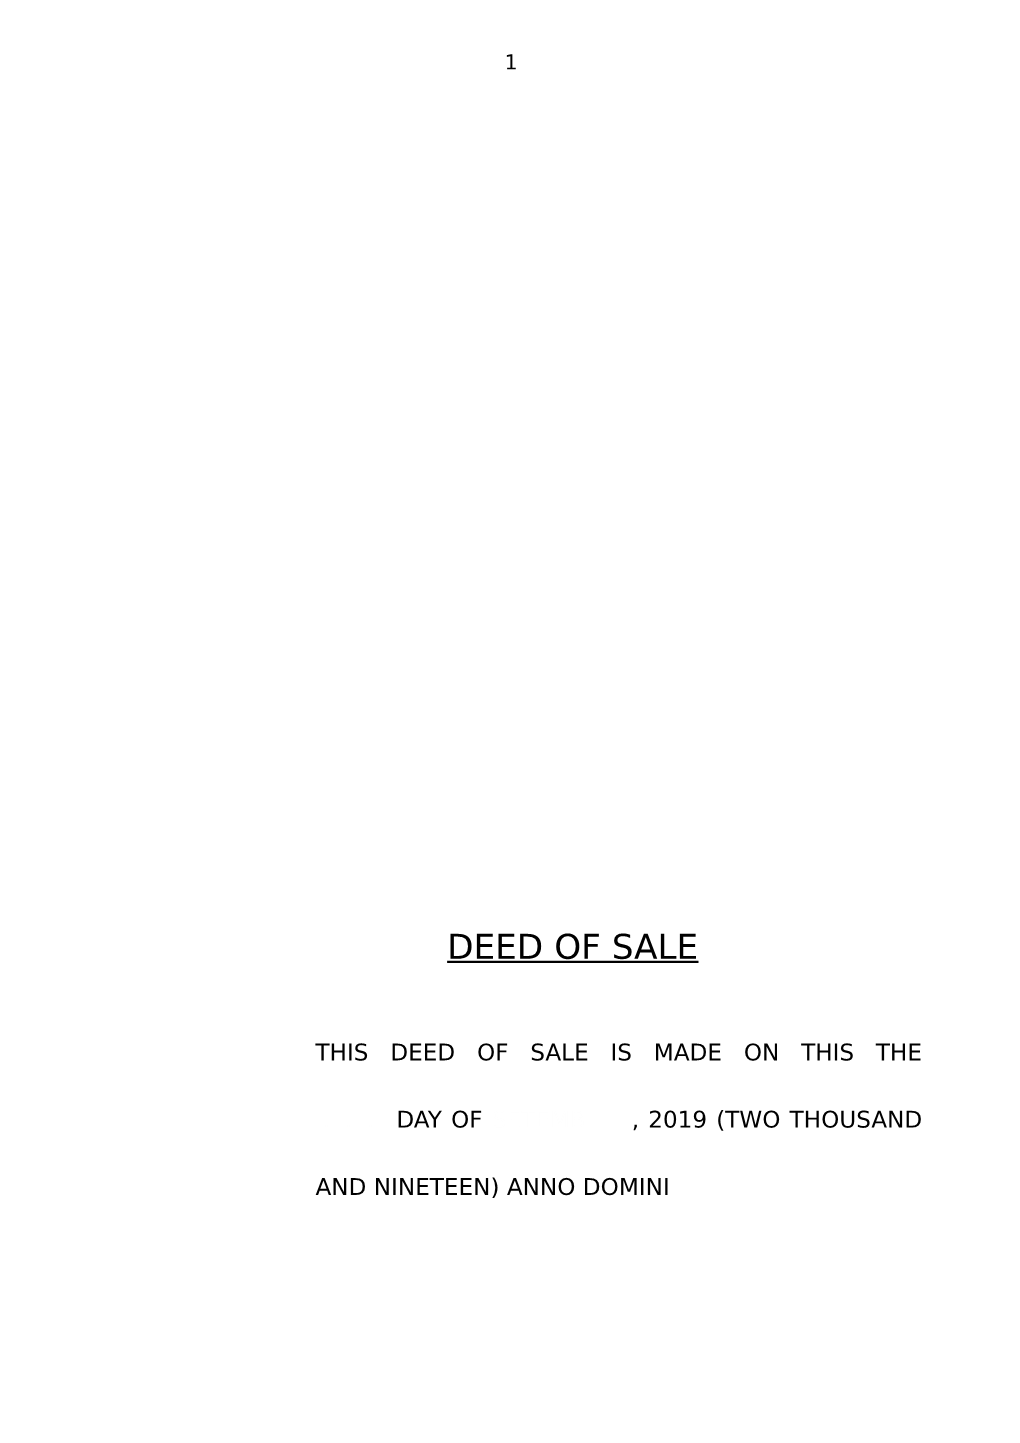 Deed of Sale